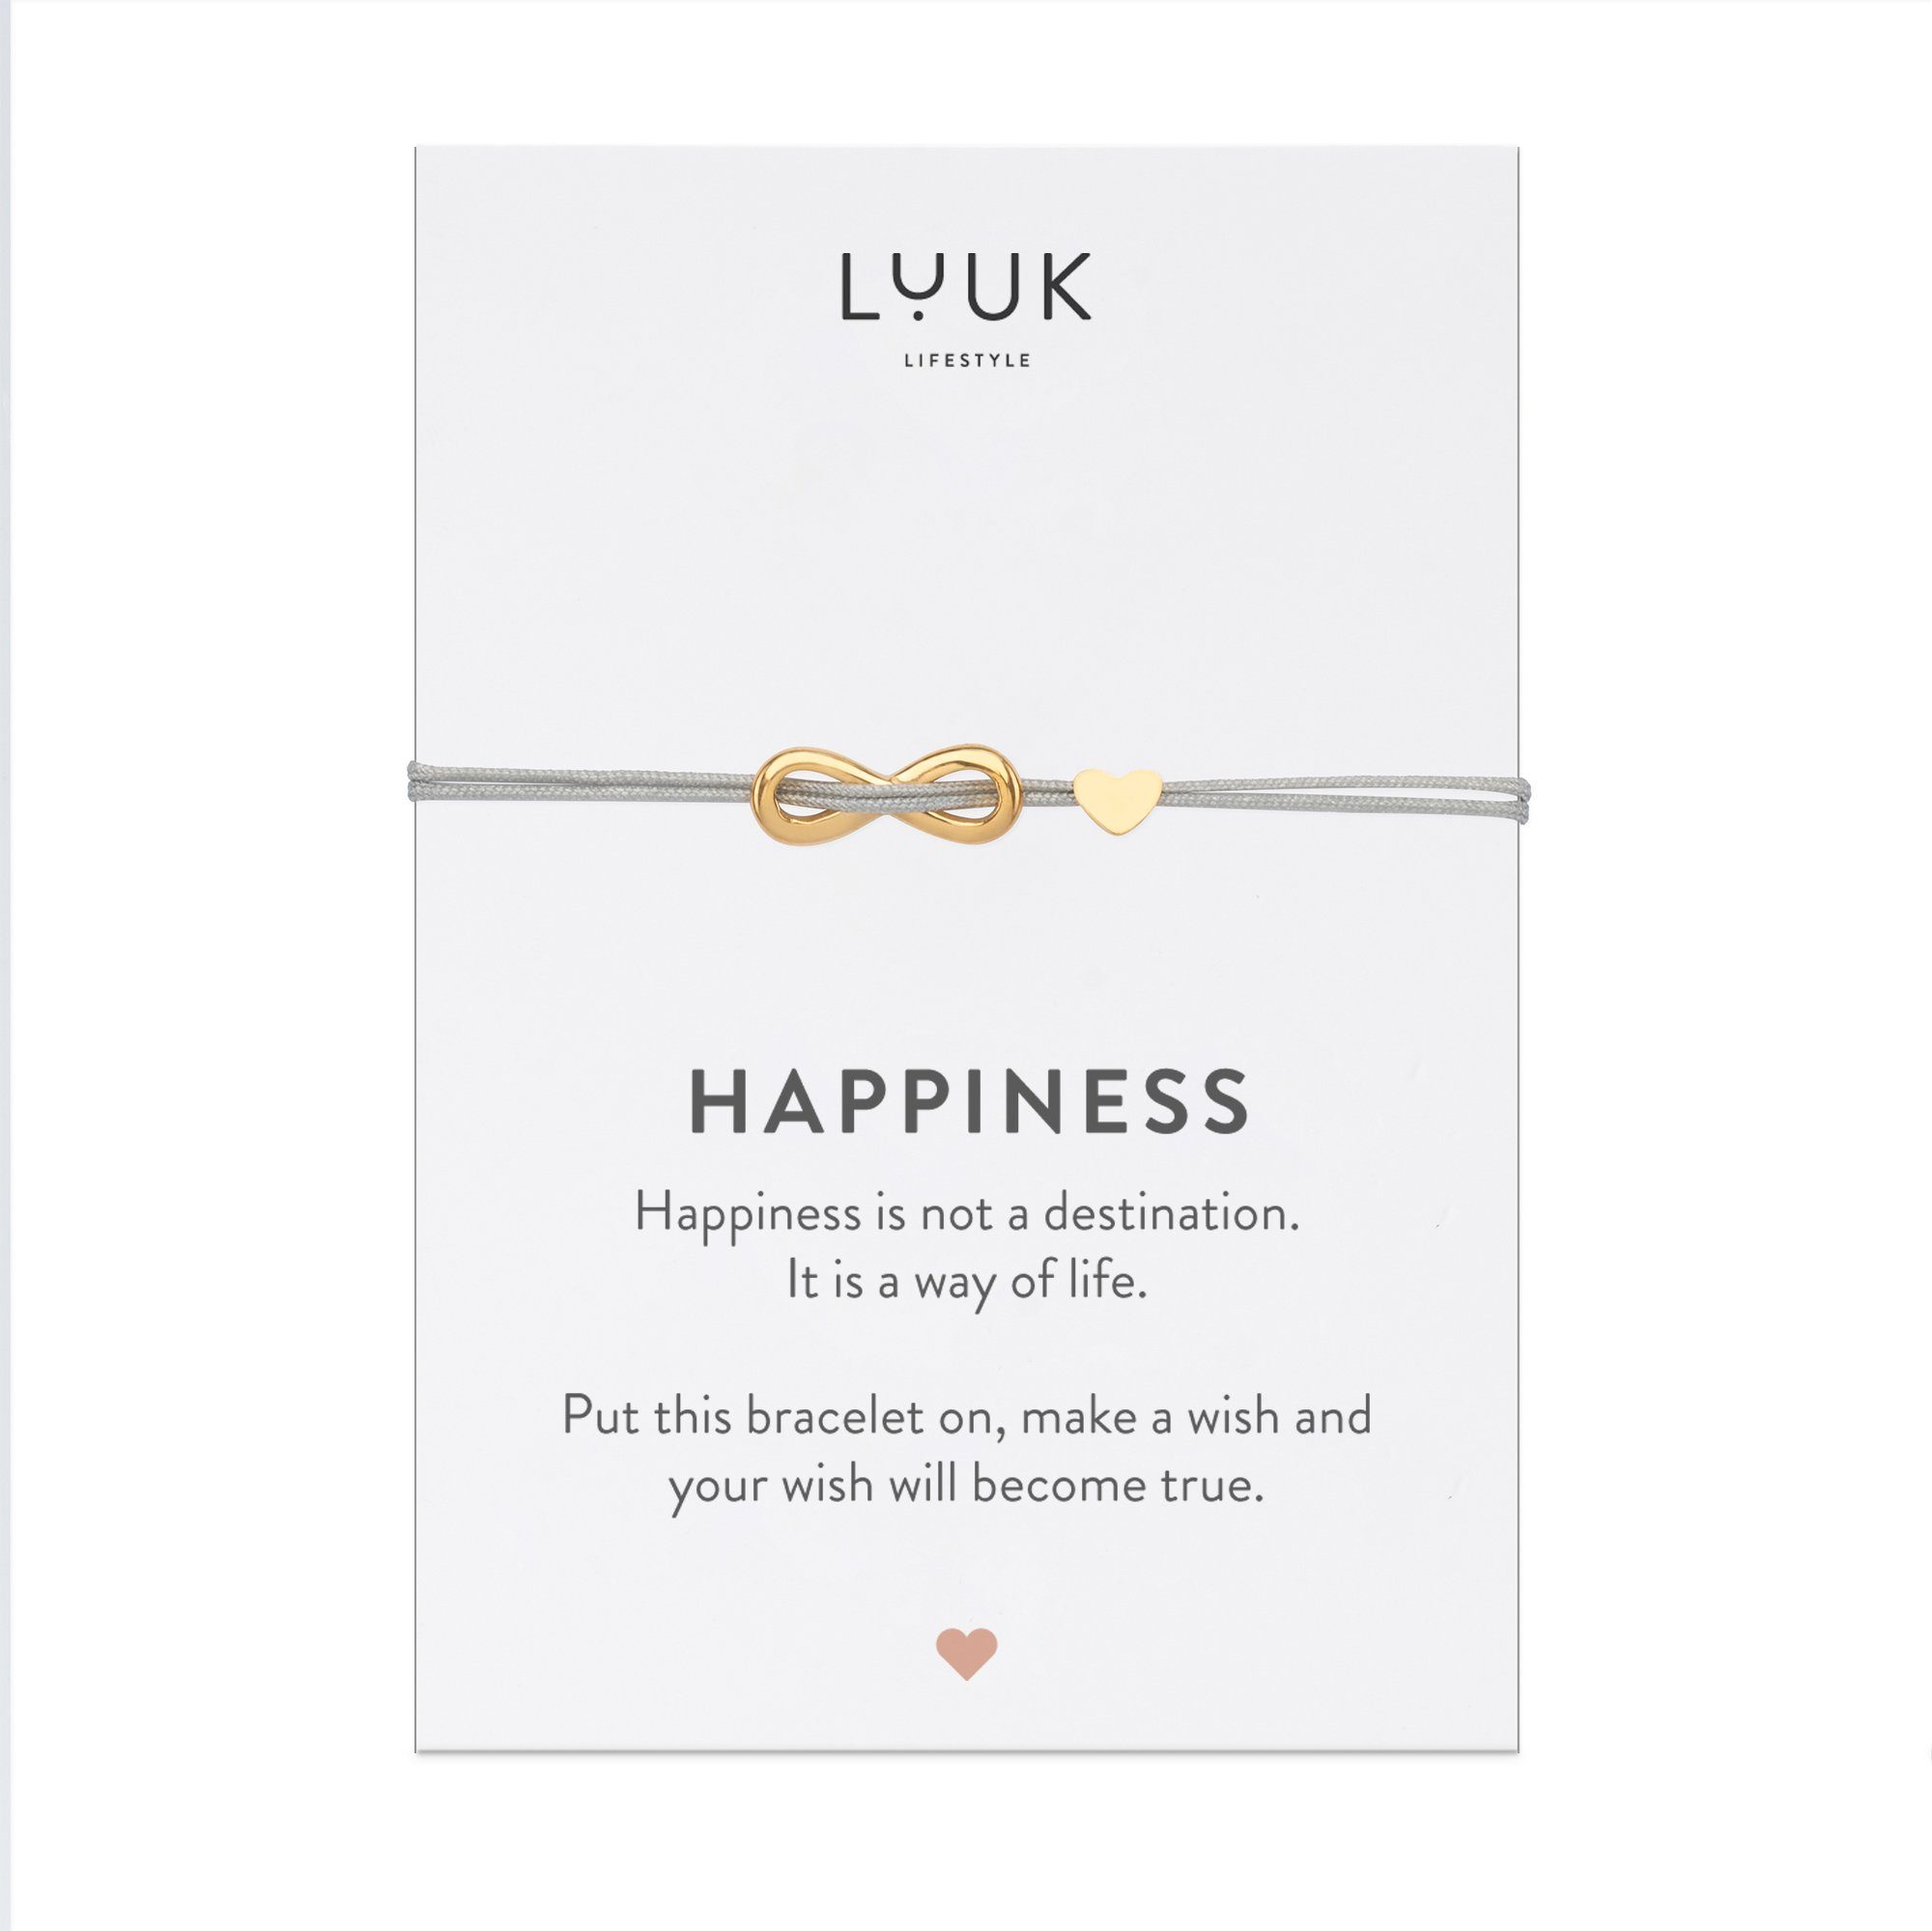 LUUK LIFESTYLE Freundschaftsarmband mit Gold Infinity, Happiness handmade, Spruchkarte